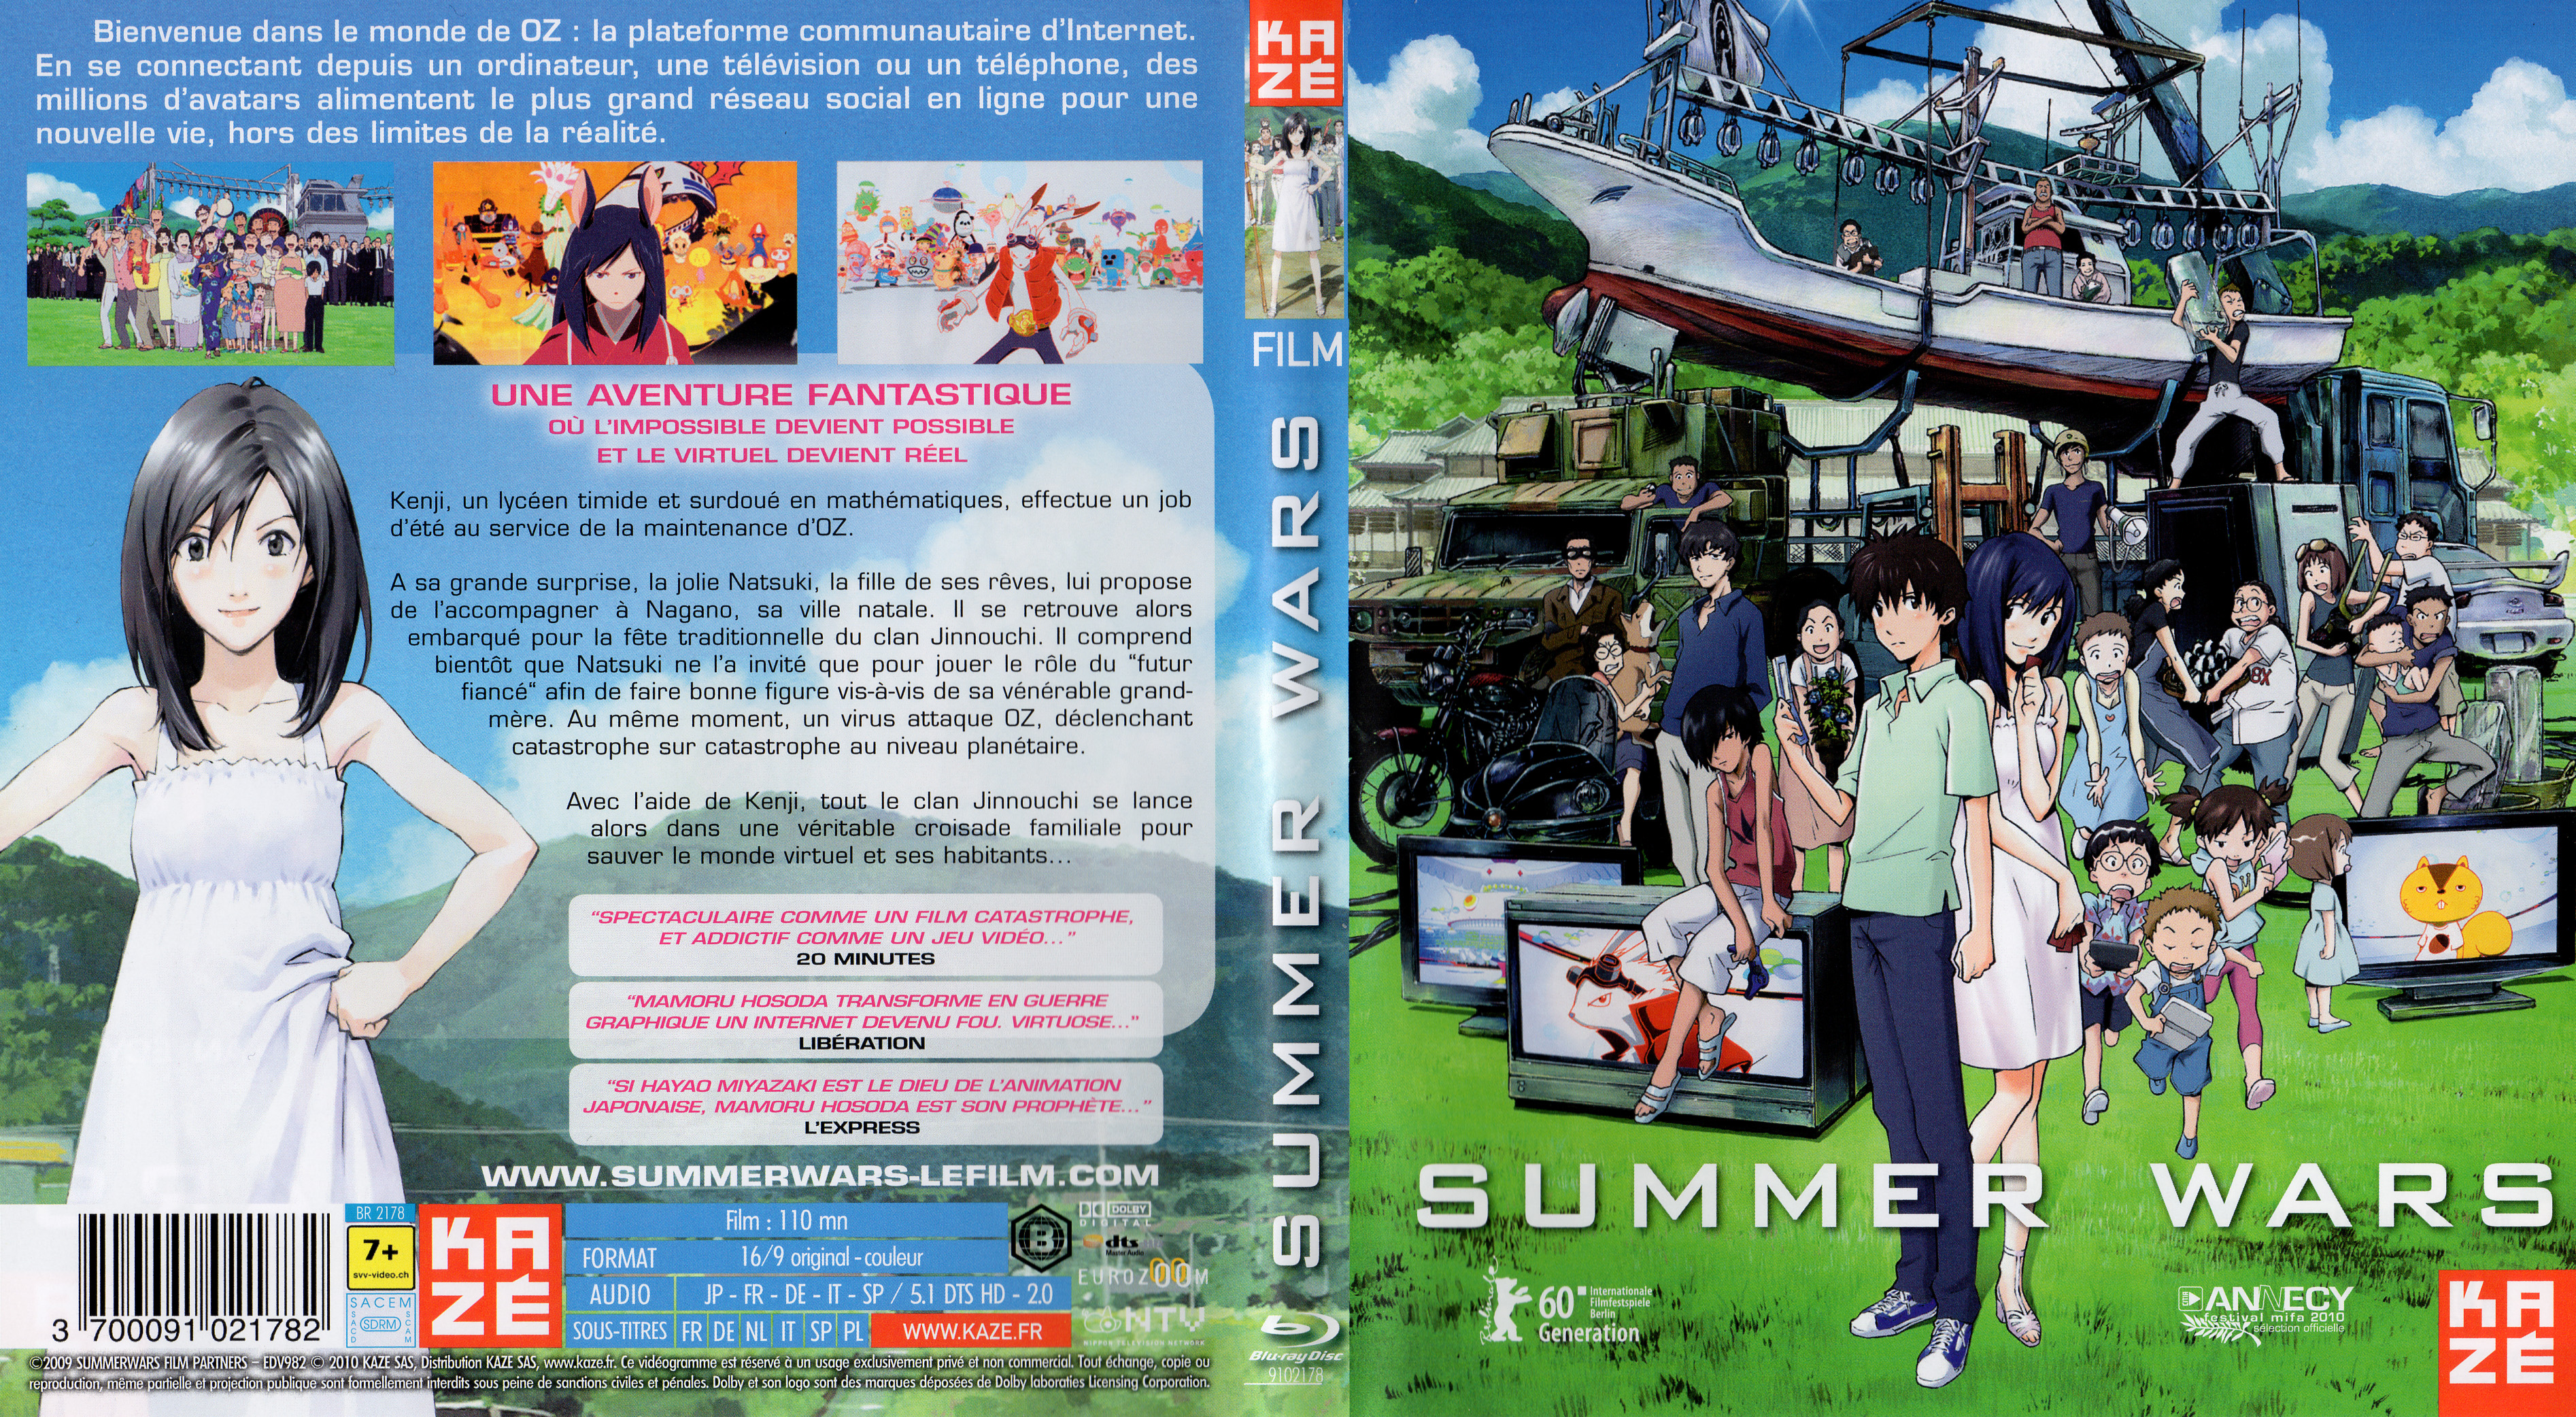 Jaquette DVD Summer wars (BLU-RAY)